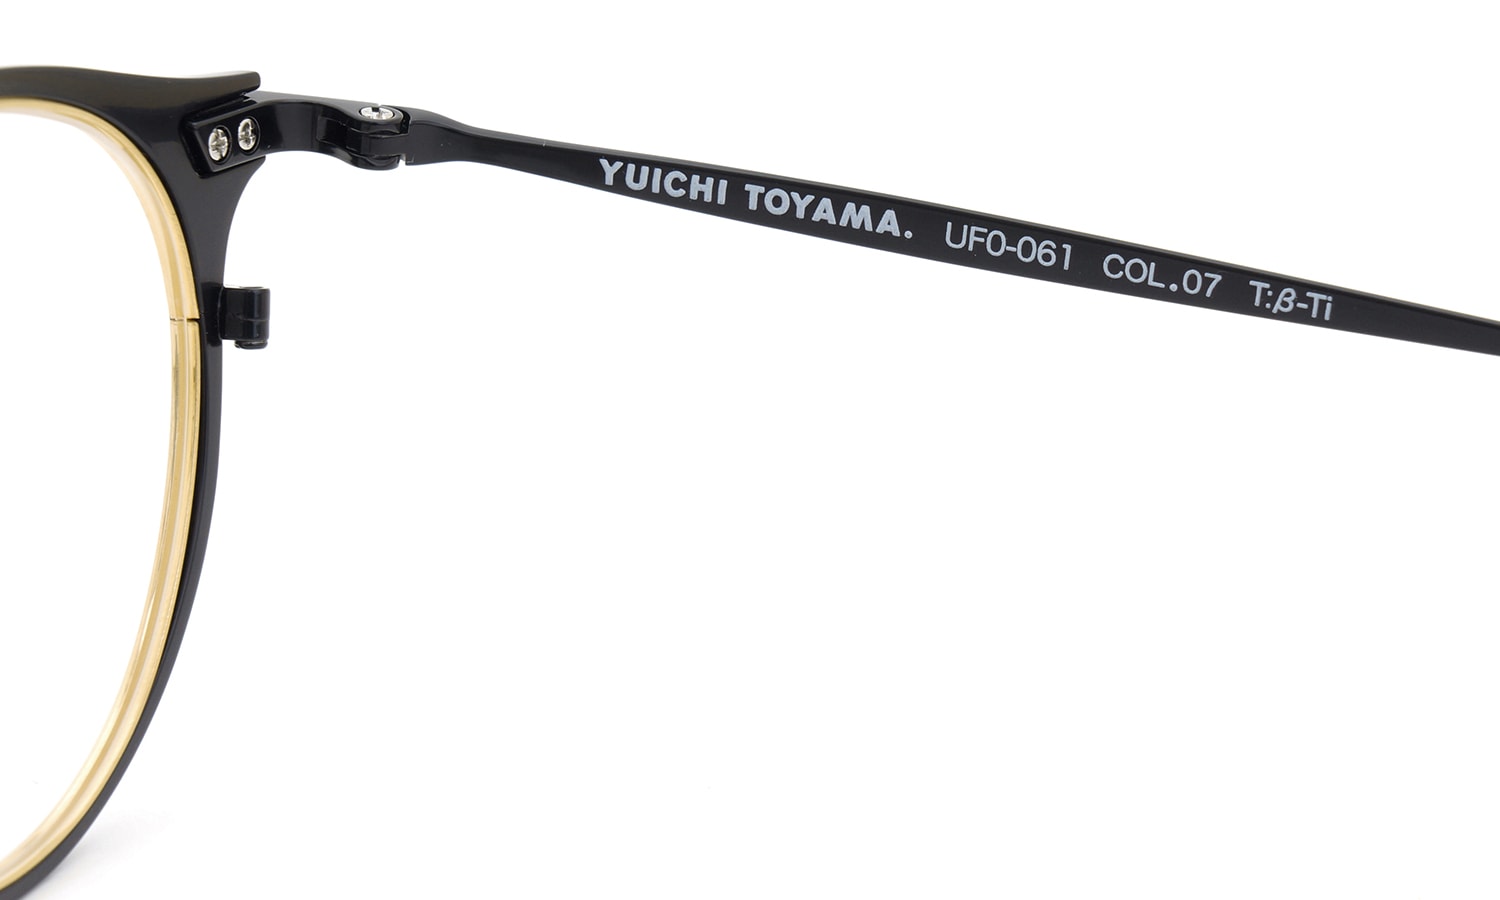 YUICHI TOYAMA UF0-061 Daniel COL.07